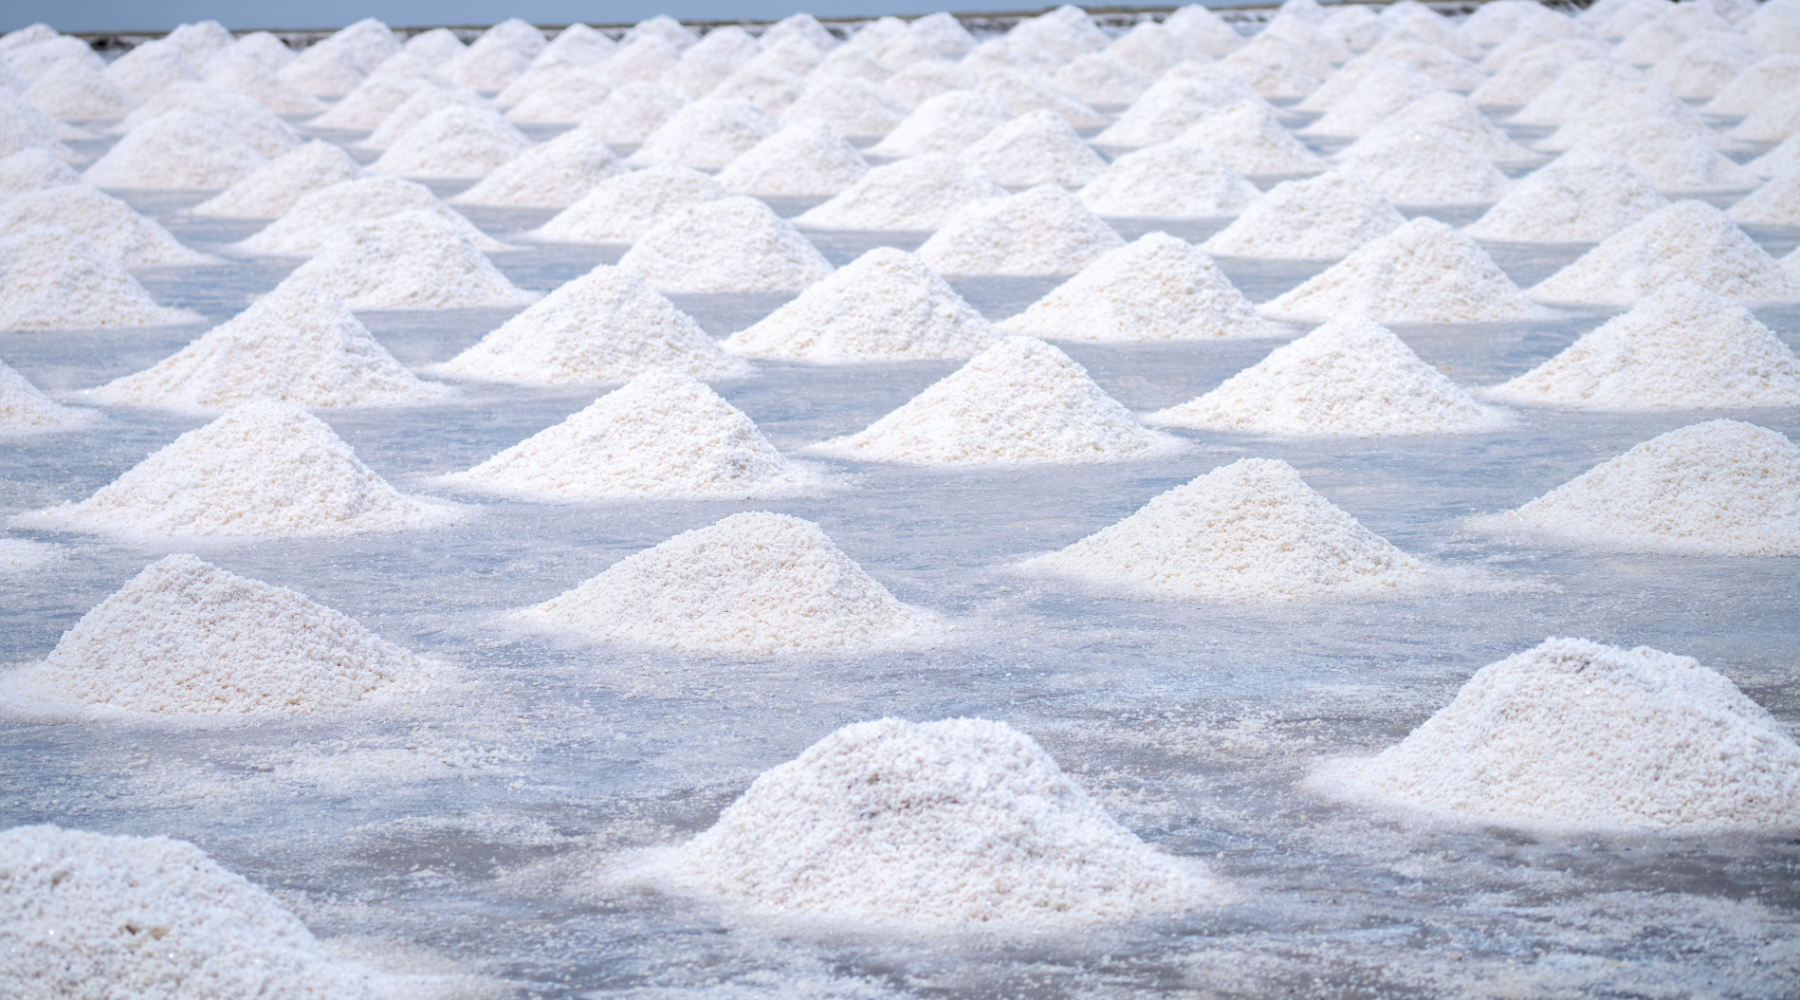 Piles of salt from the ocean